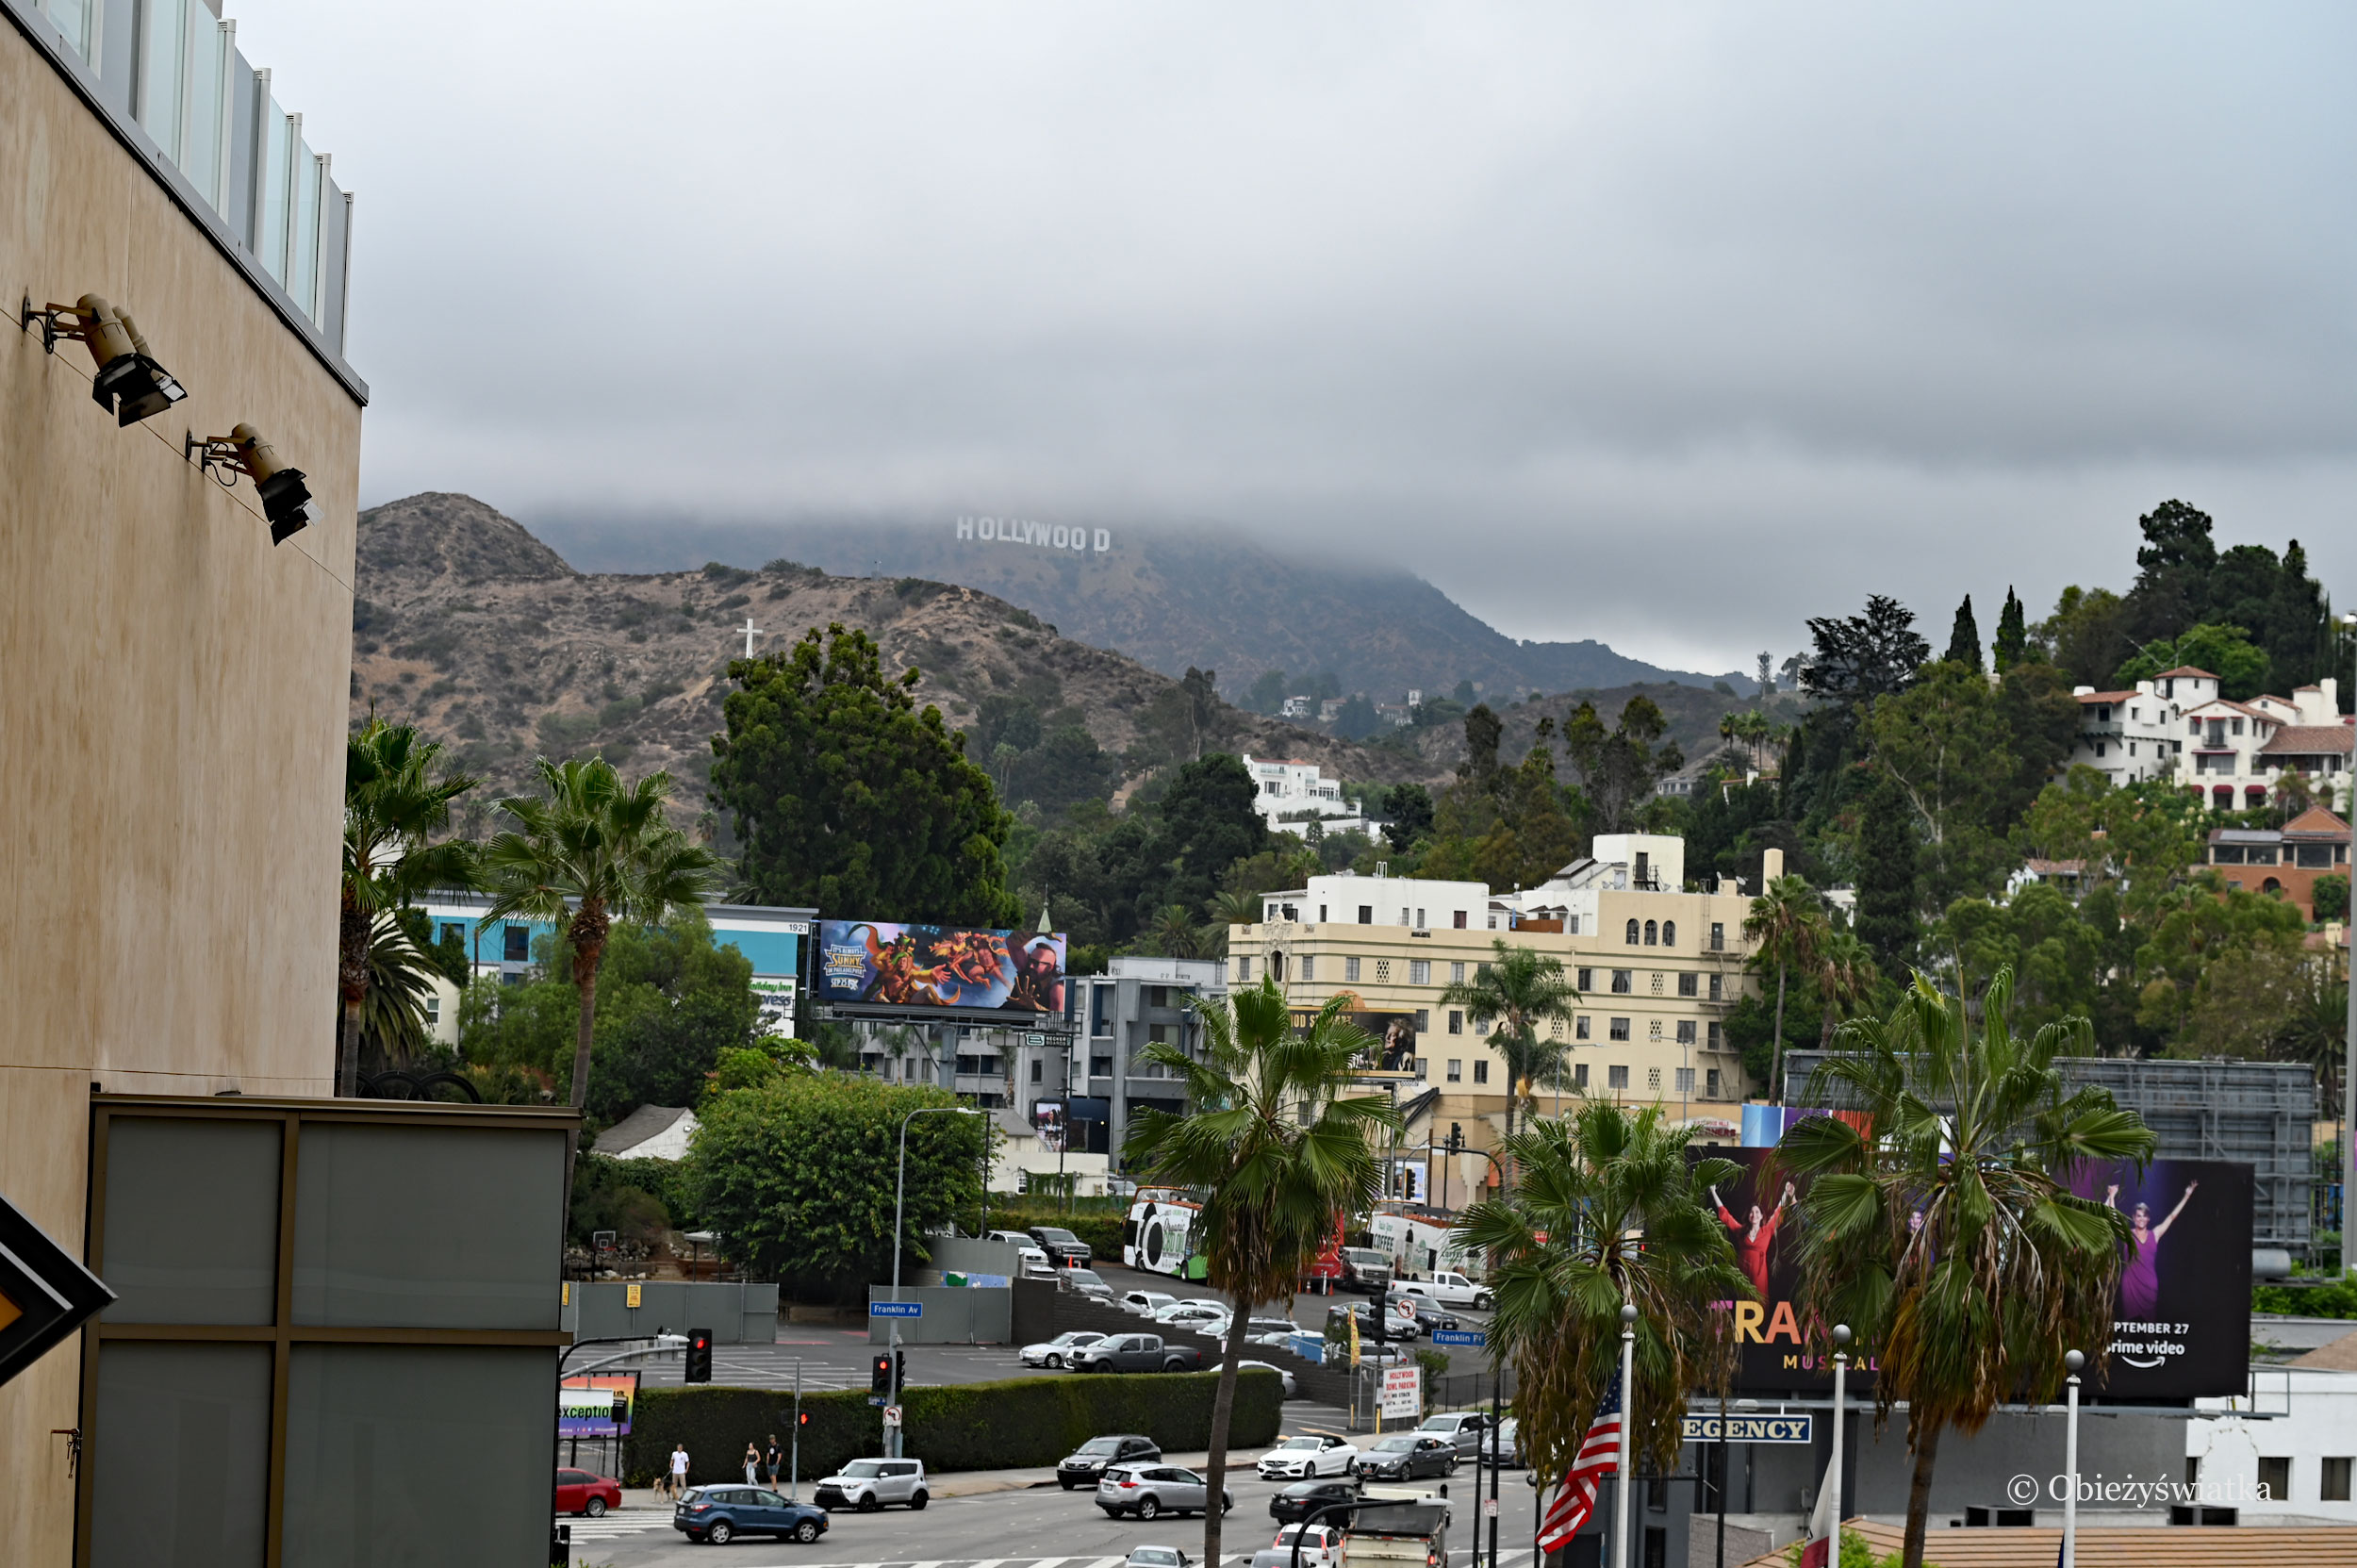 Los Angeles i Hollywood Sign